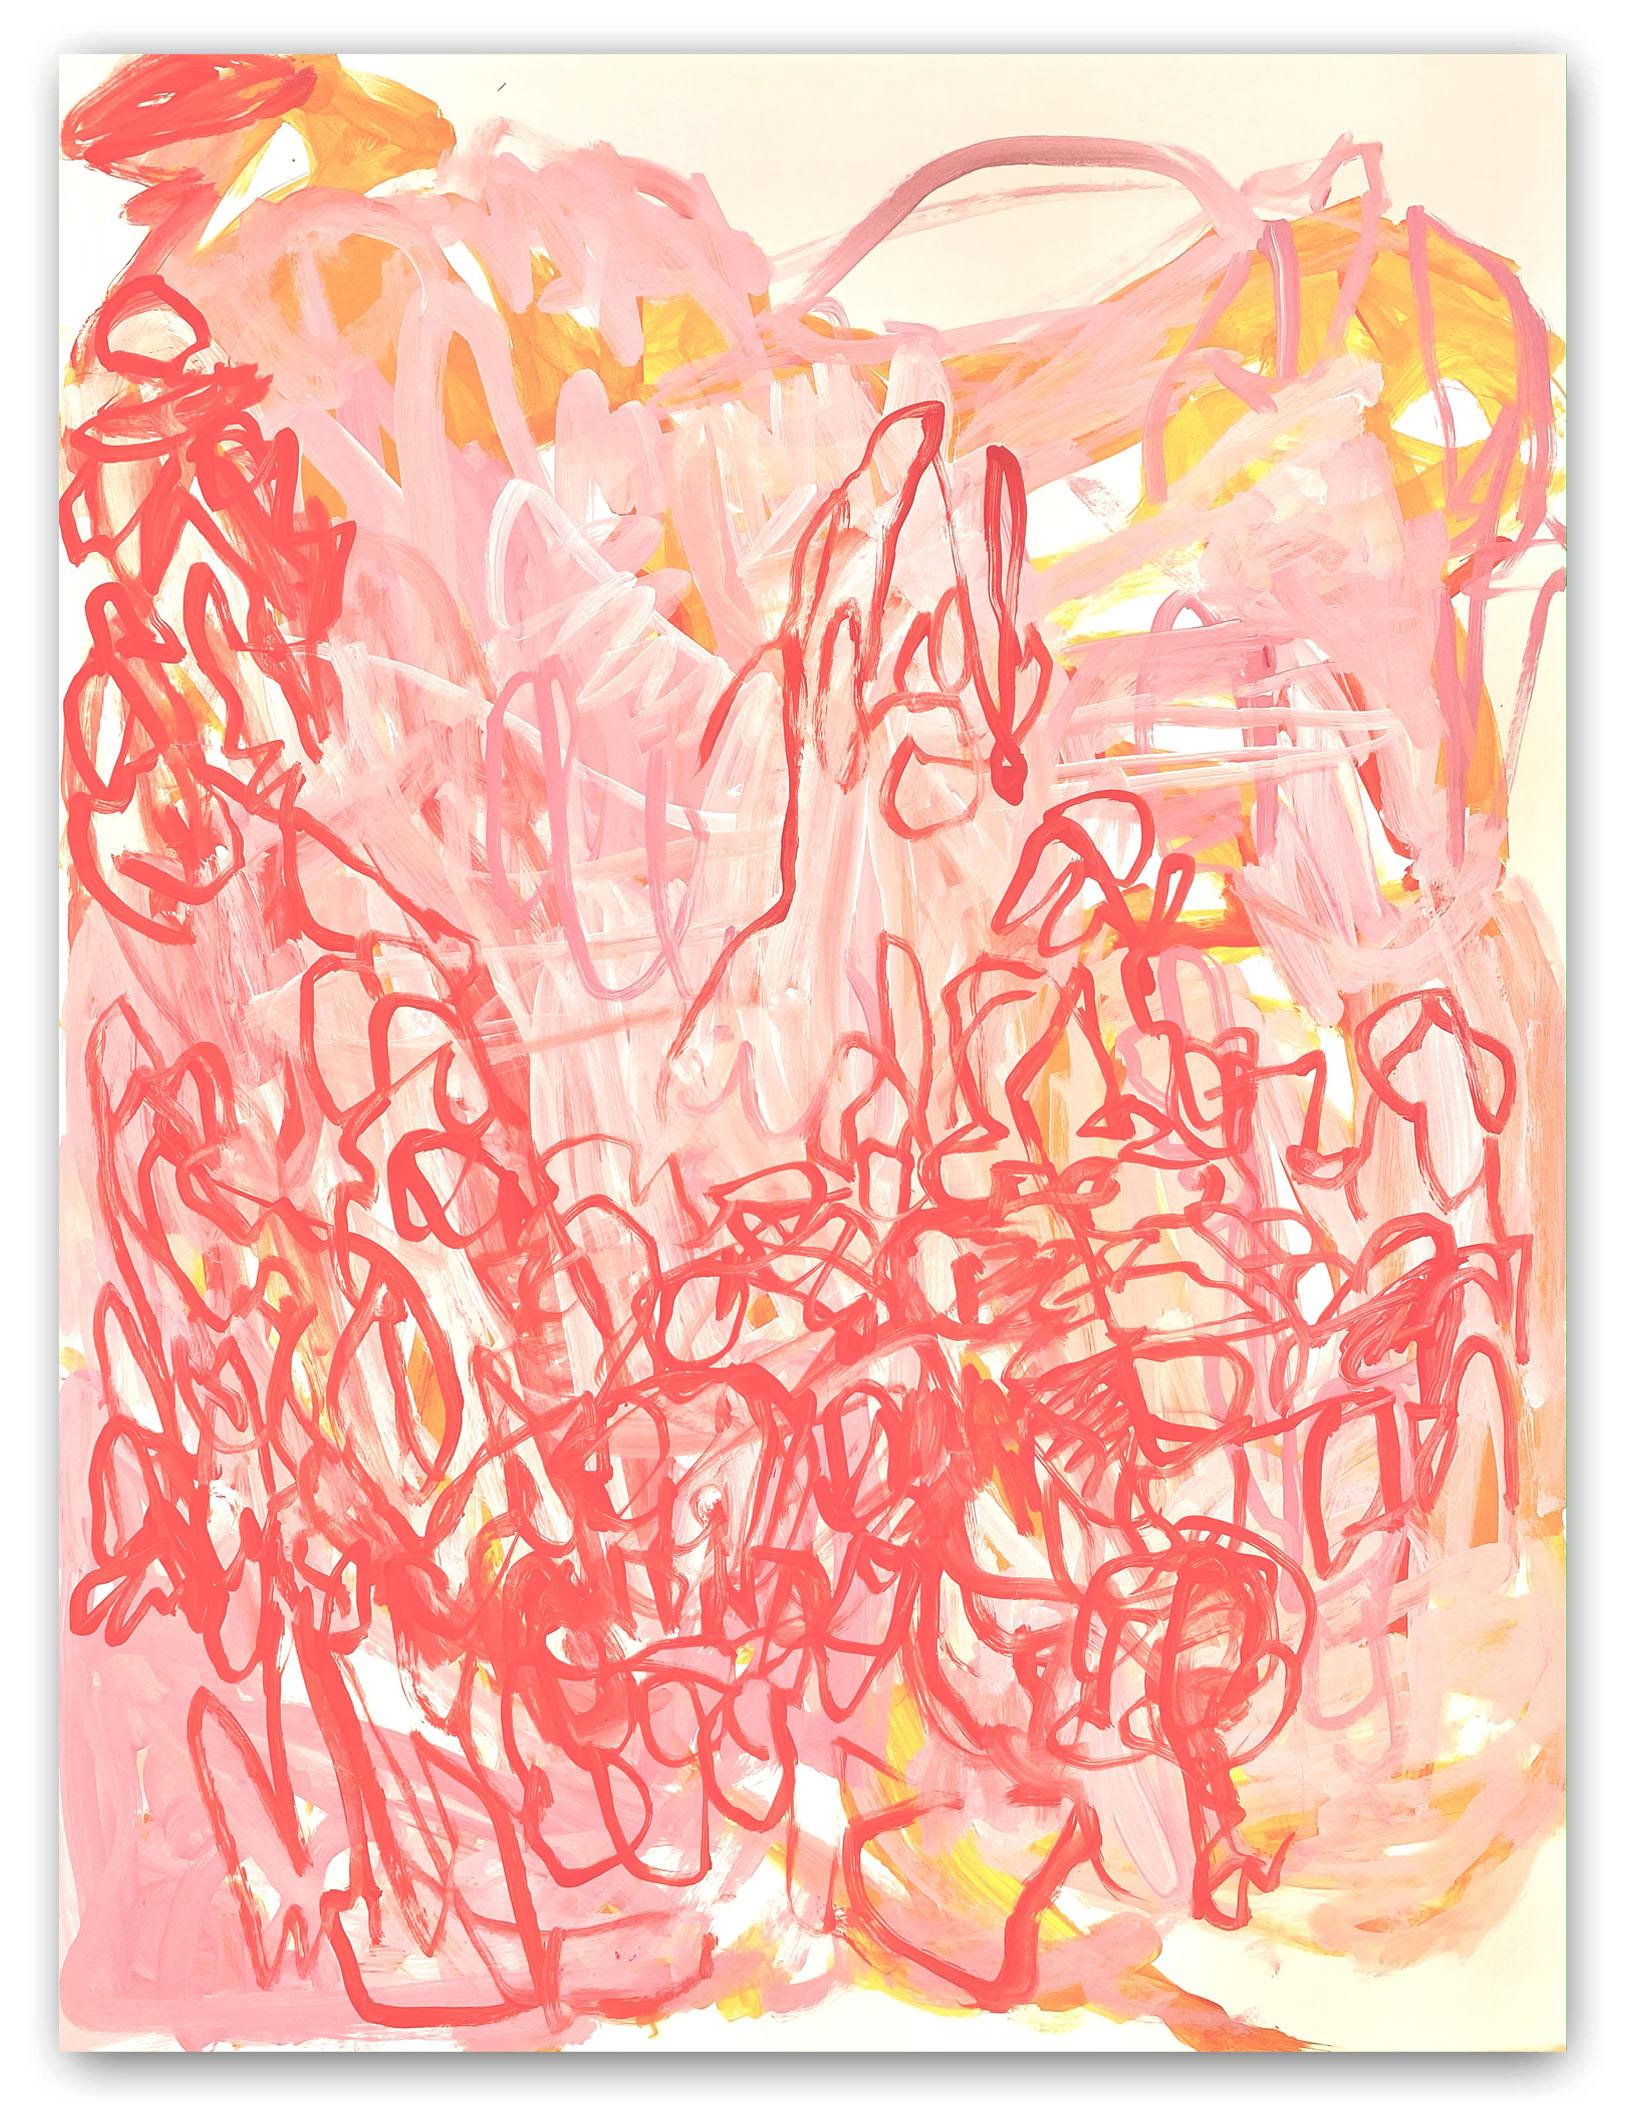 Abstract Painting Laura Basterra Sanz - Toujours home N7 (peinture abstraite)